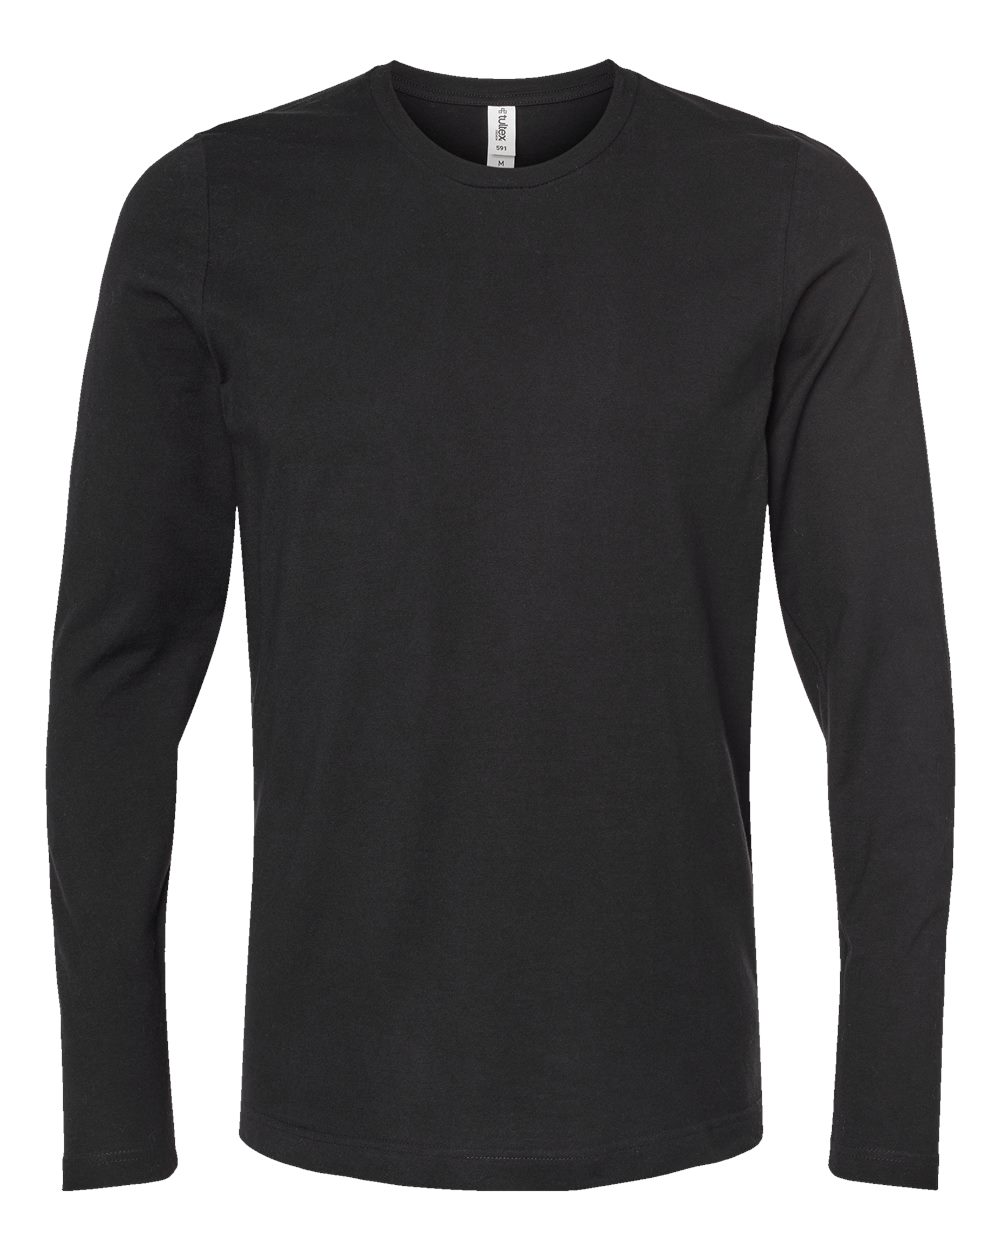 Tultex 591 Unisex Long Sleeve Premium Cotton Crew Neck Stylish T-Shirt